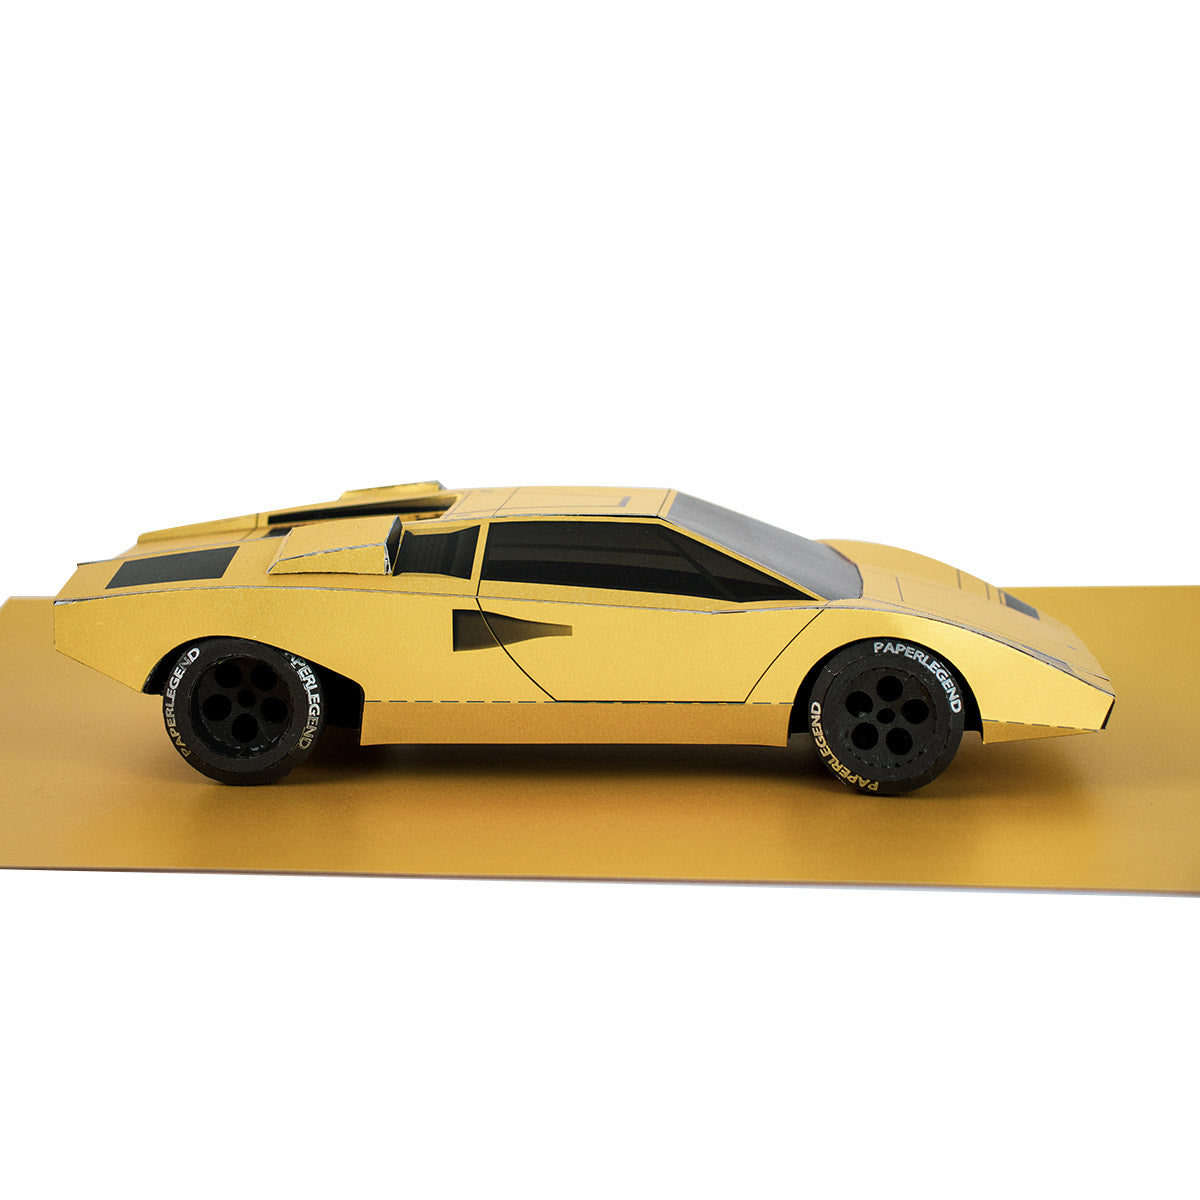 The Coun - 1:18 - Printable Papercraft Car Sculpture Kit - Side View